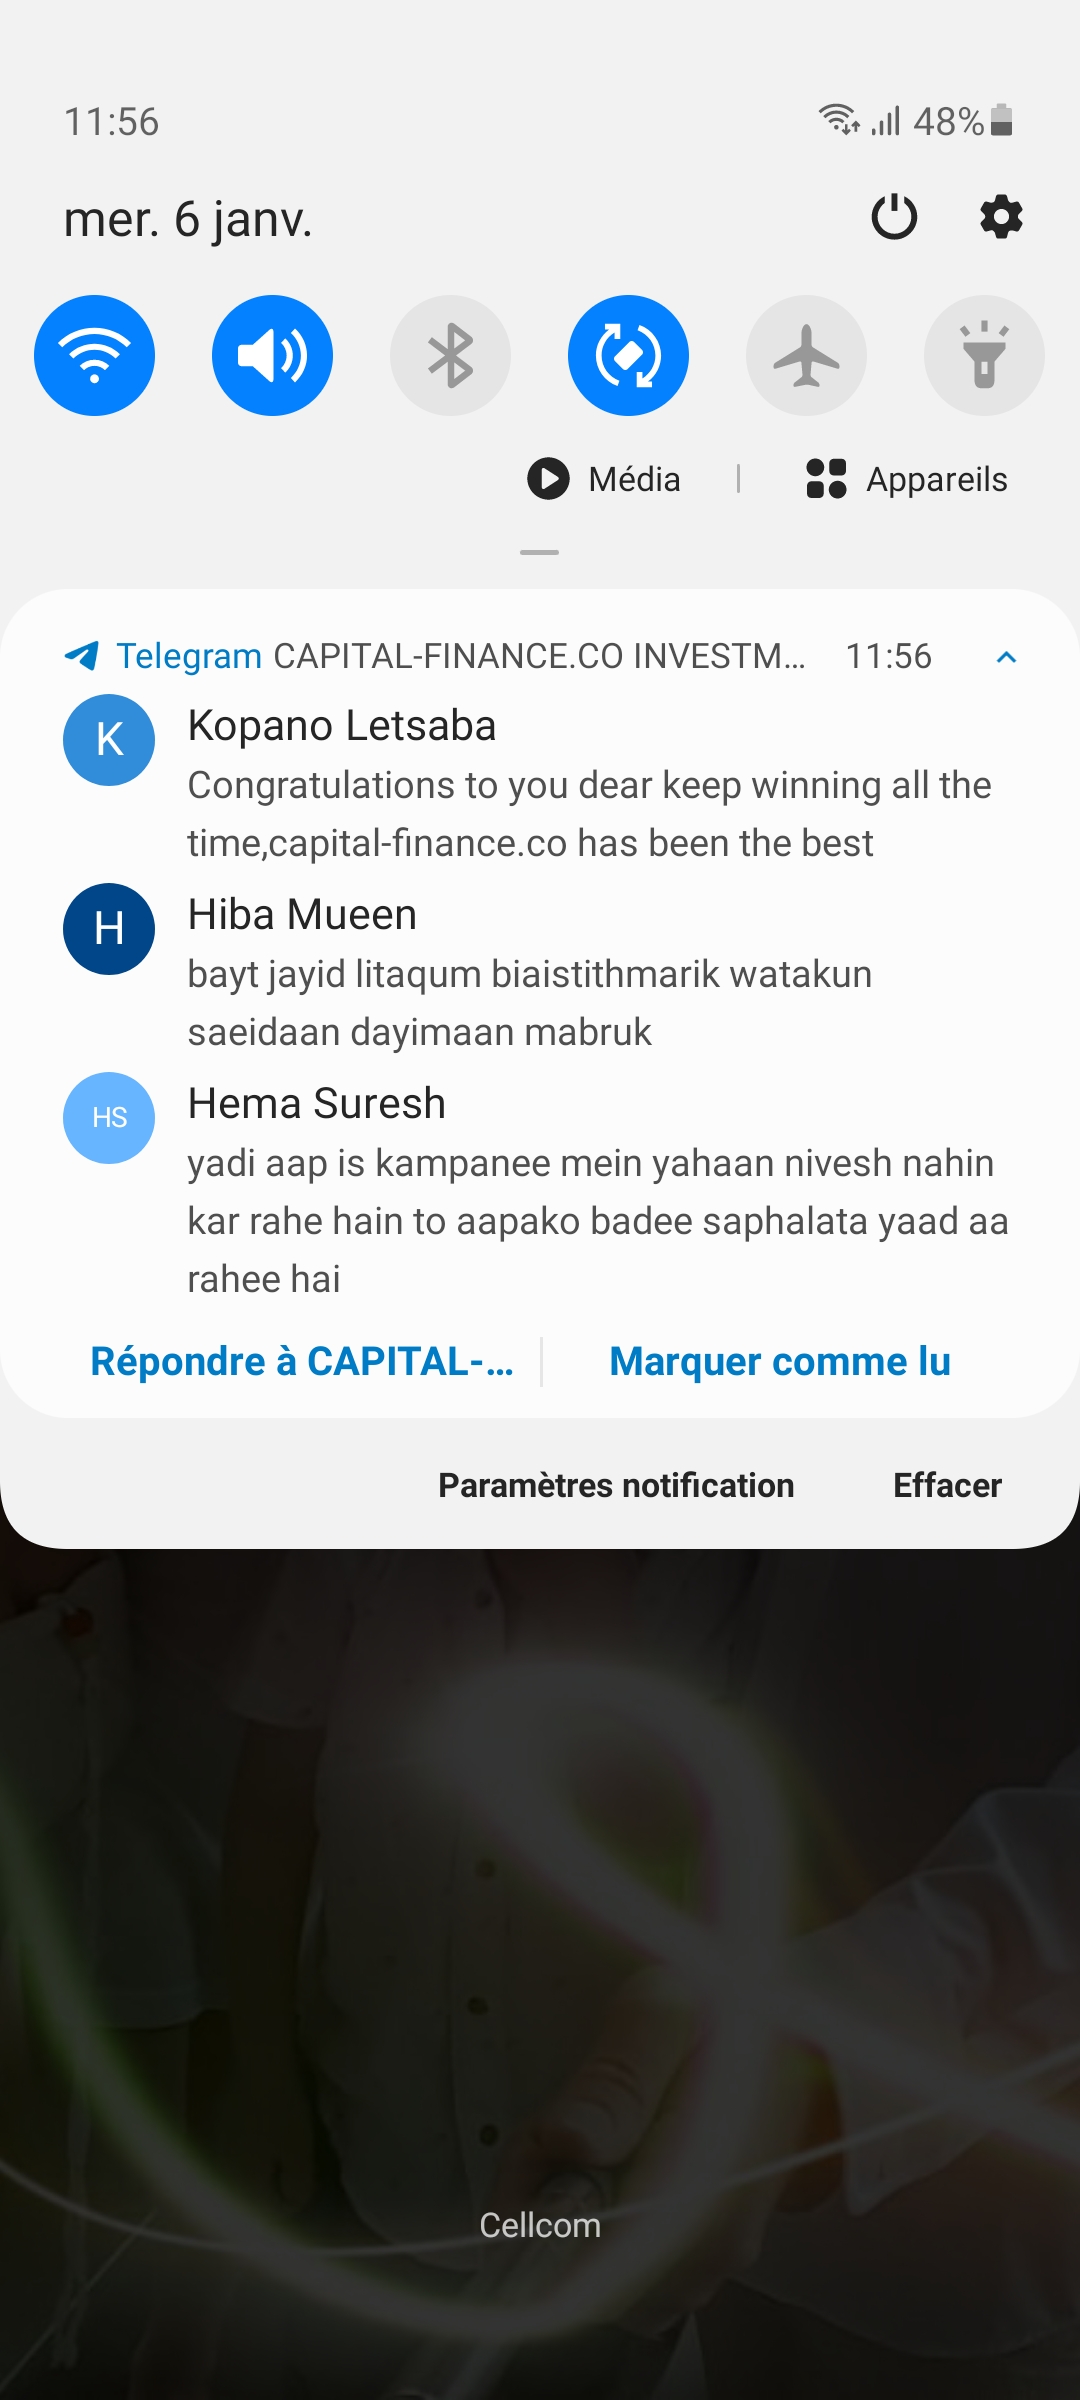 Capital-Finance.co complaint Spamming company